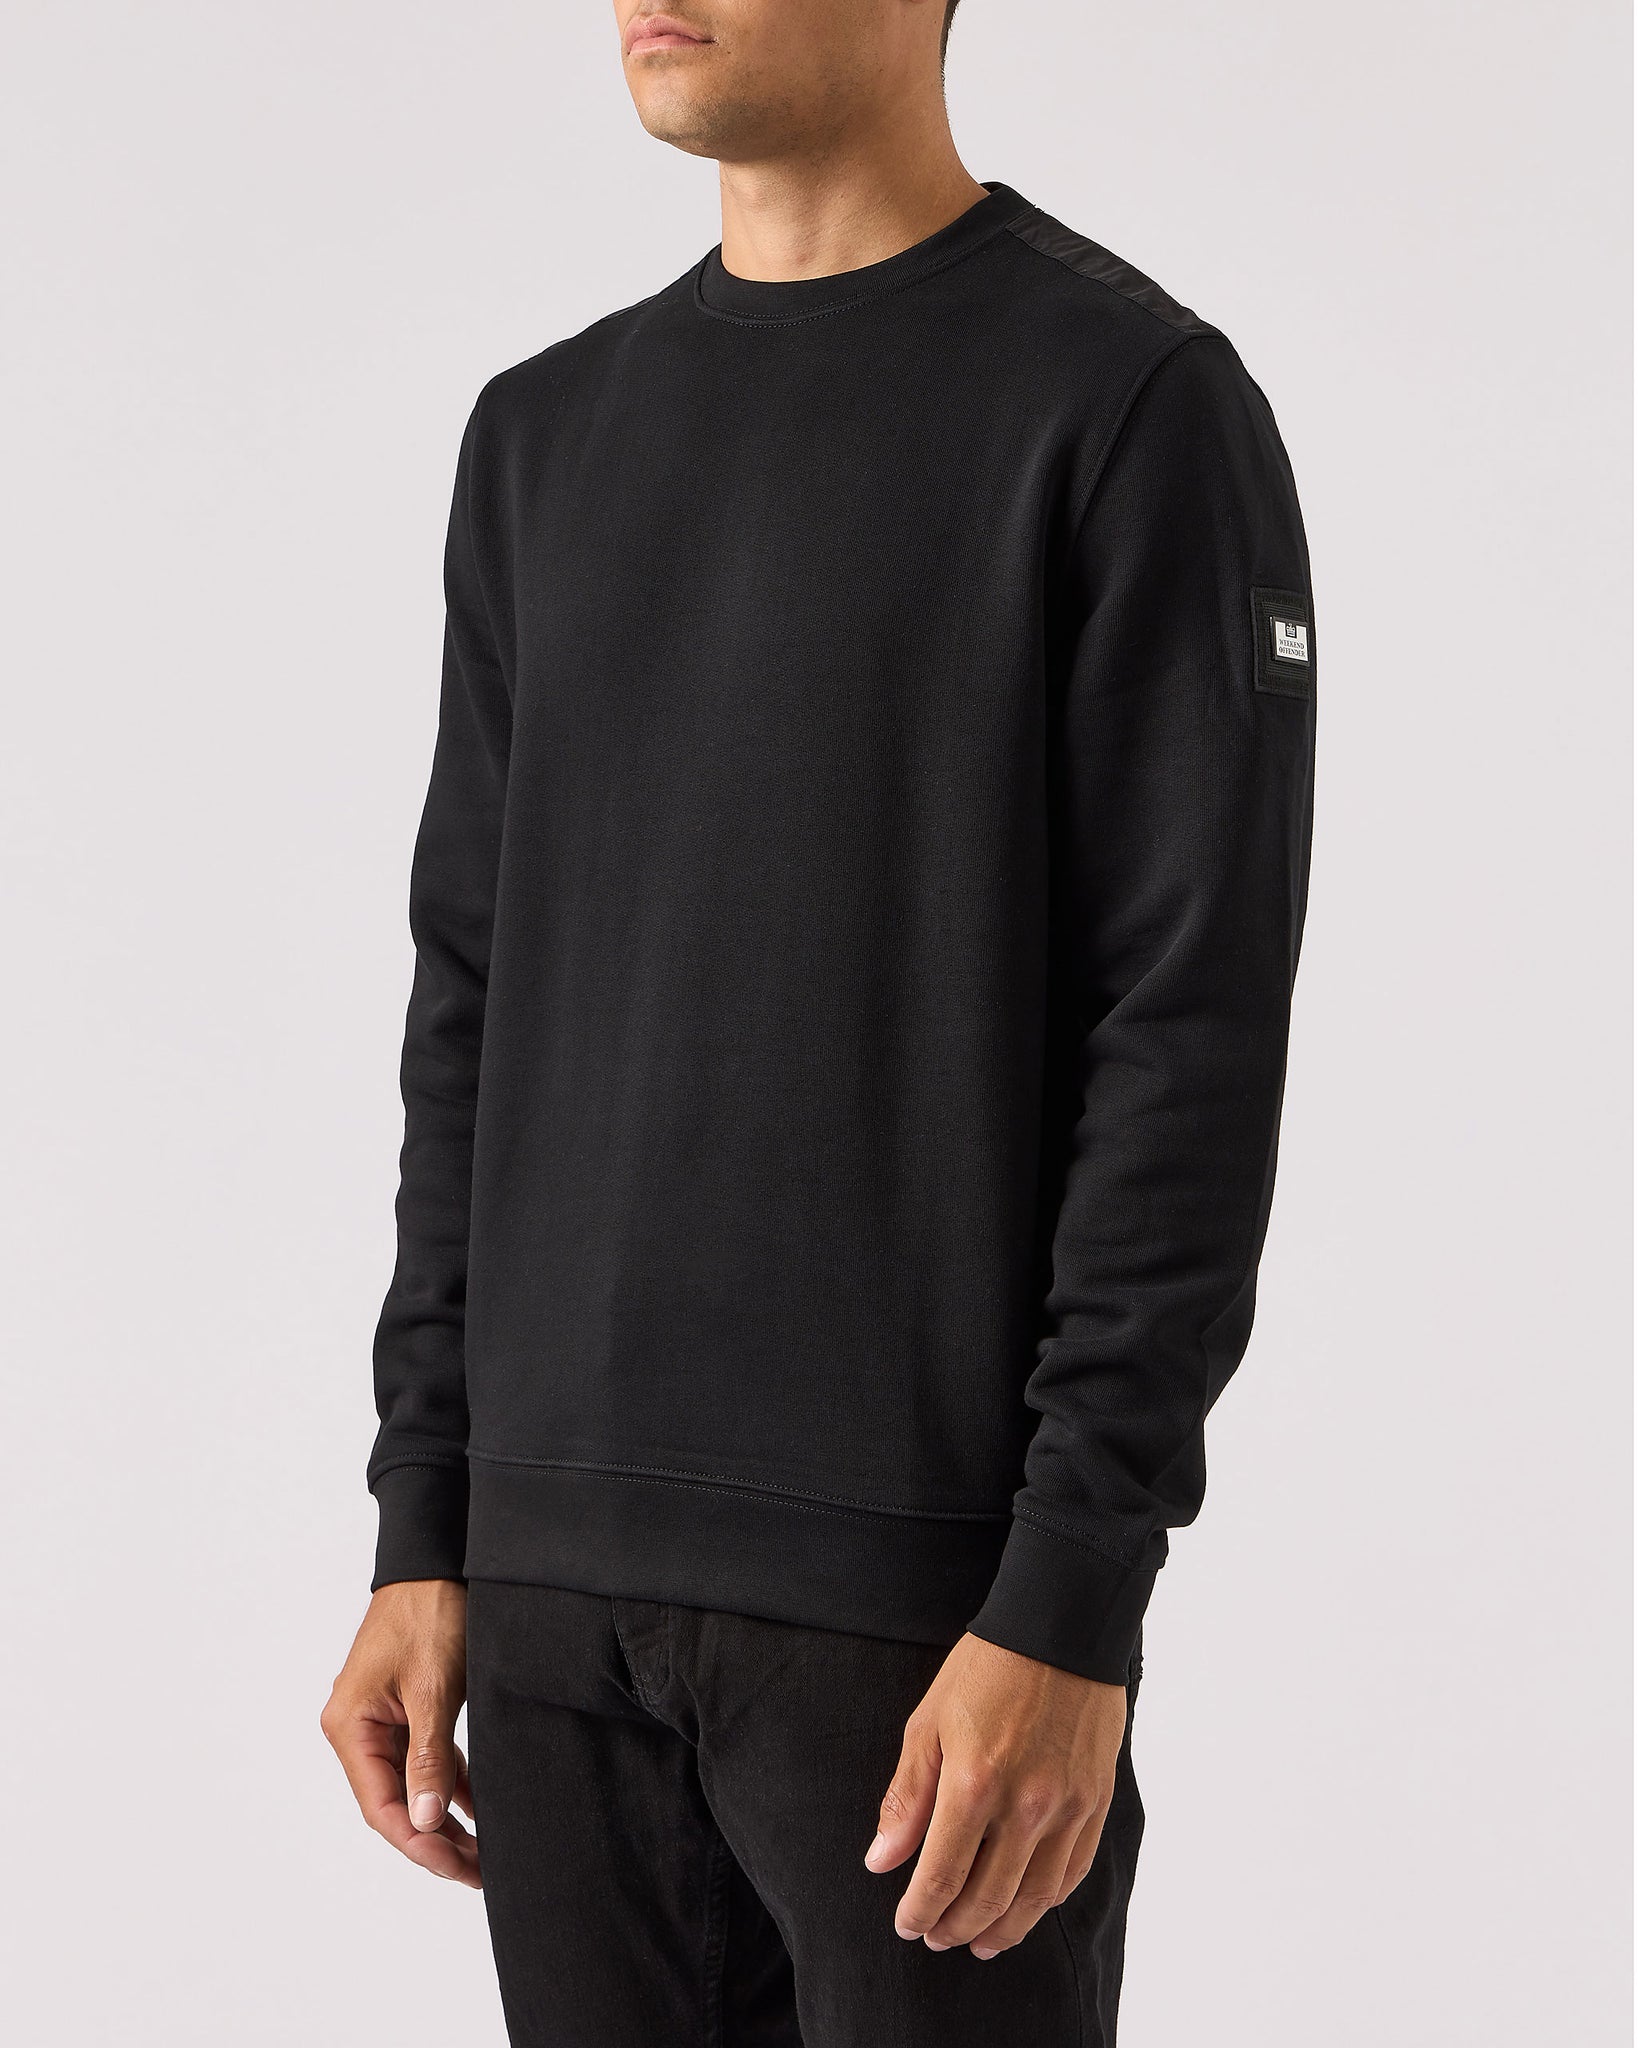 F Bomb Sweatshirt Black